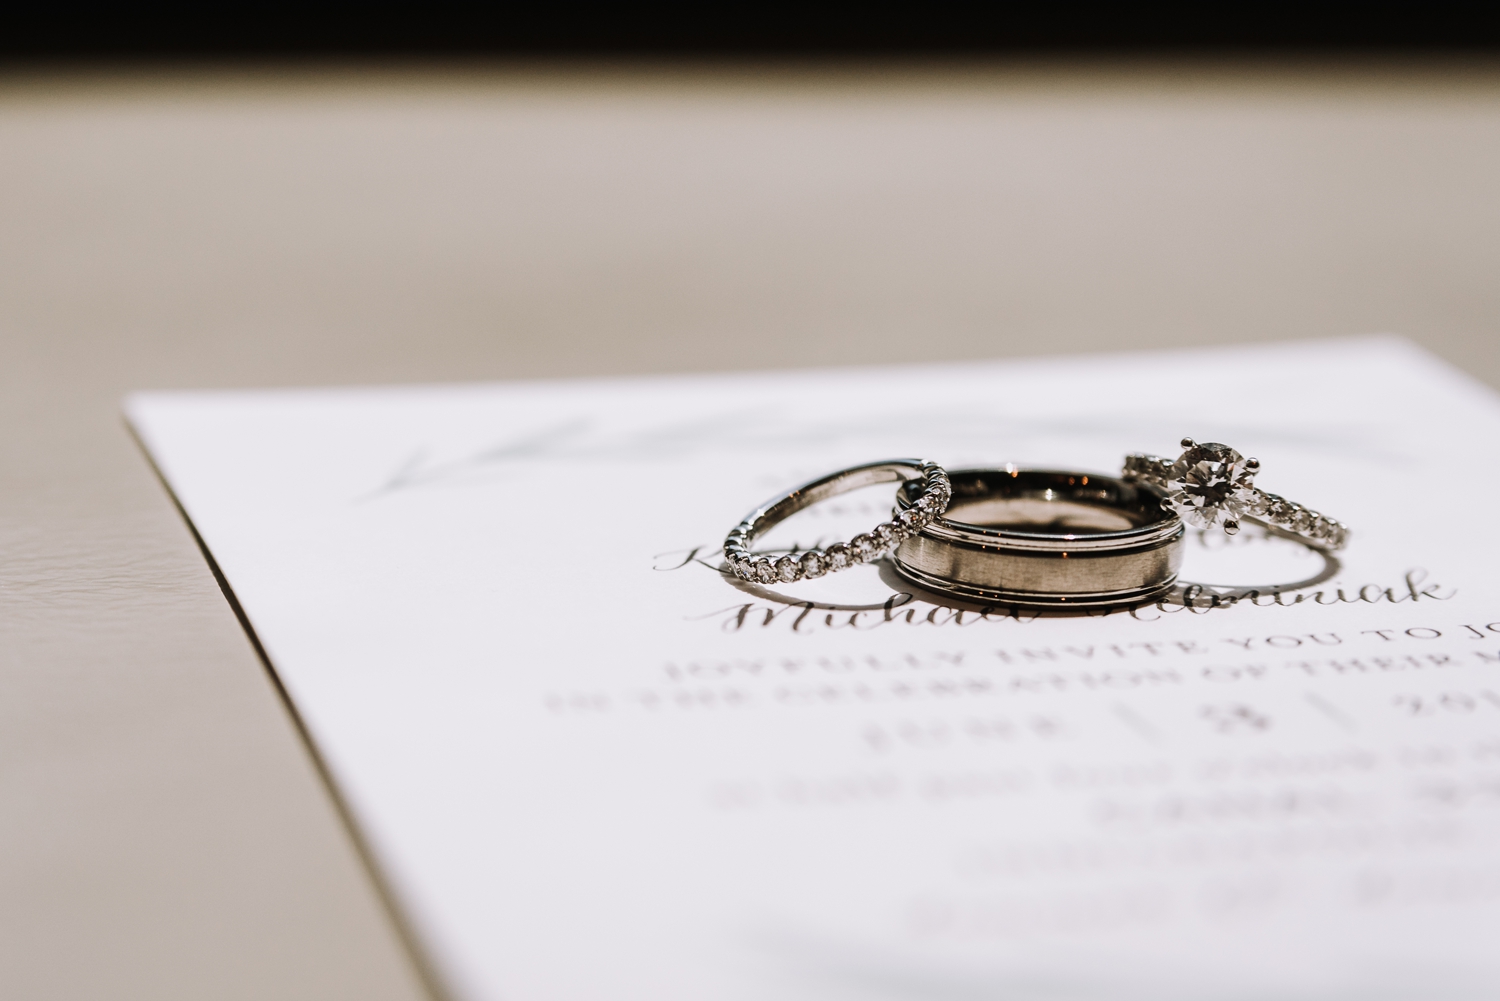 Gorgeous Engagement Ring - Classic Indianapolis Wedding - Canal 337 Wedding - The Overwhelmed Bride Wedding Blog